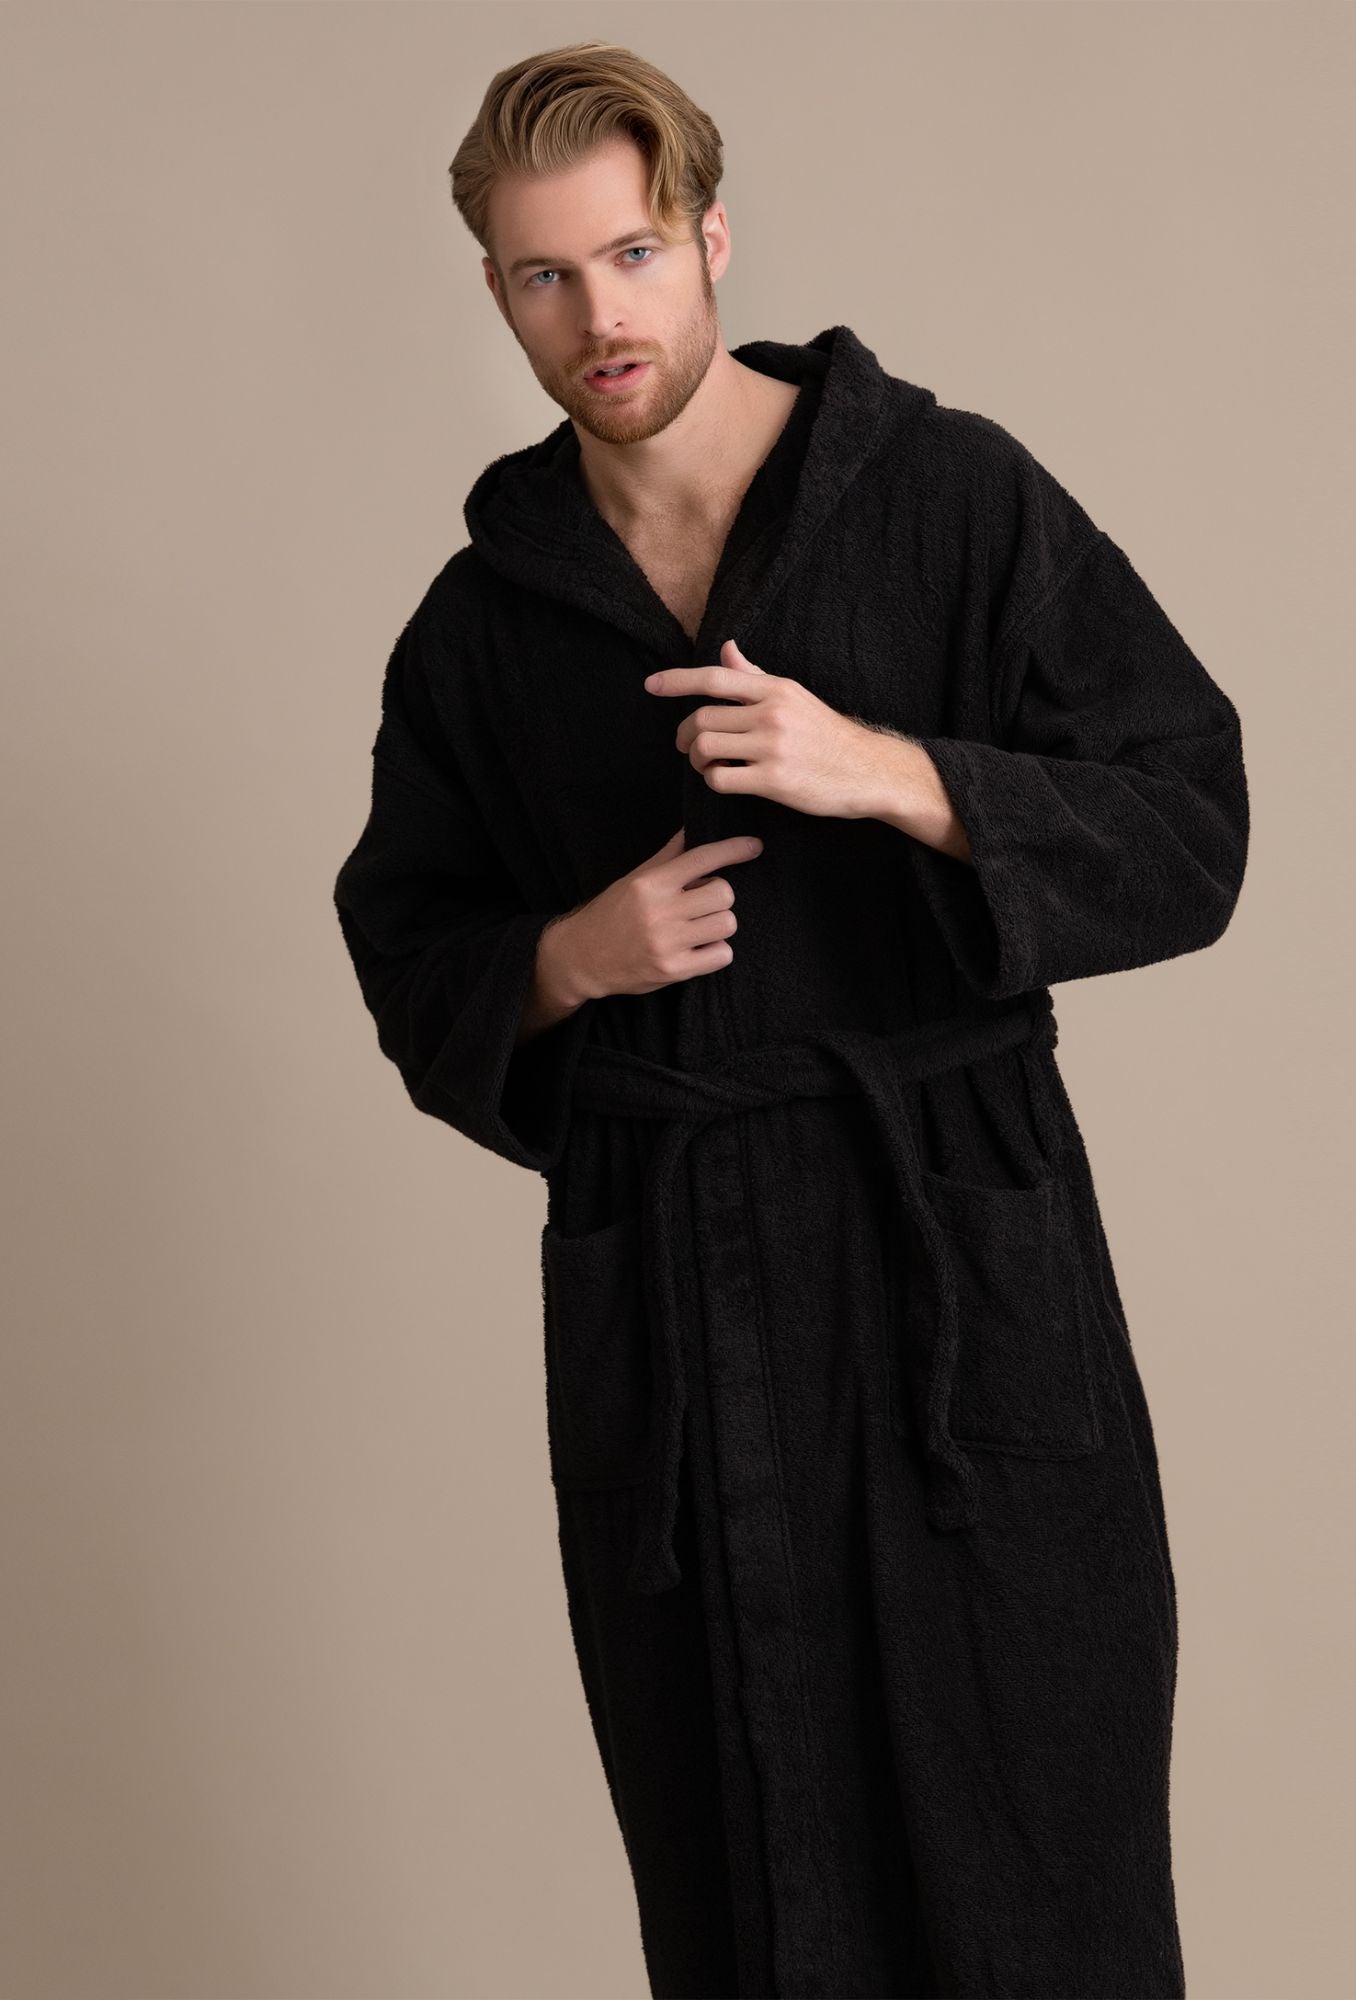 Men's Classic Hooded Bathrobe Turkish Cotton Terry Cloth Robe